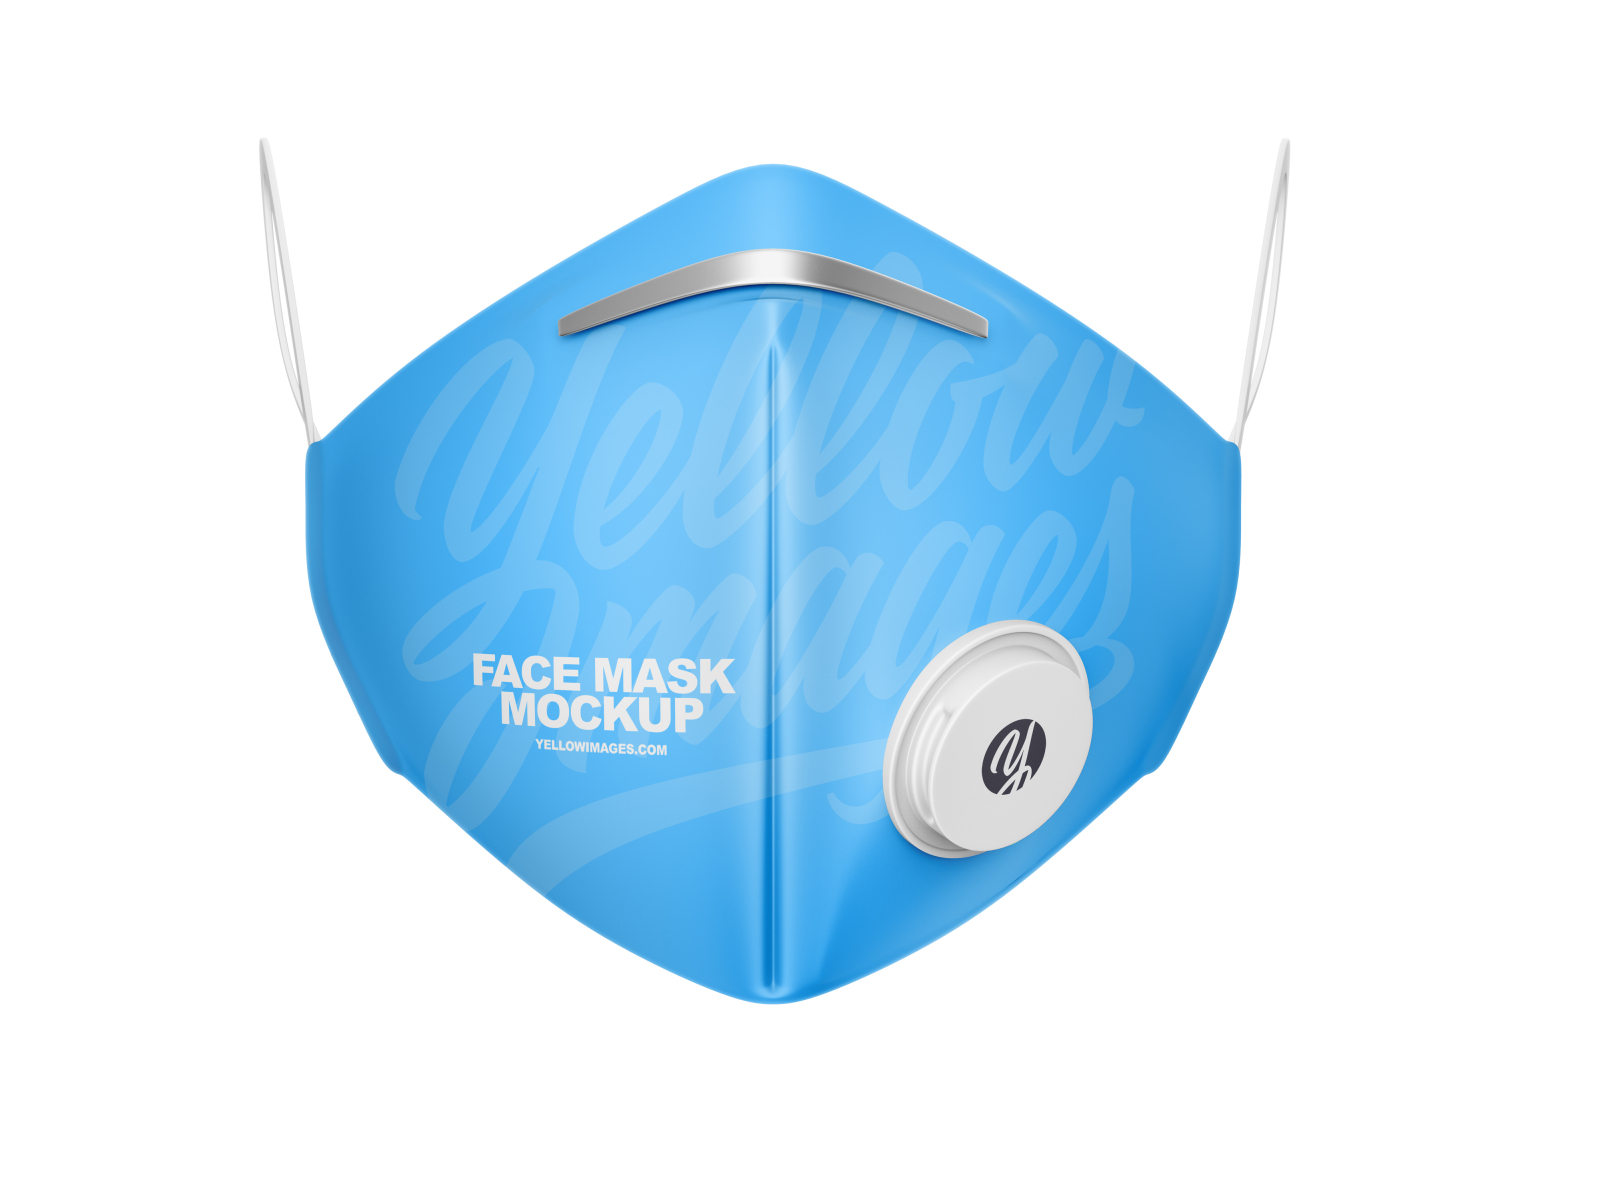 Download Mask Box Packaging Mockup Download Free And Premium Psd Mockup Templates And Design Assets PSD Mockup Templates